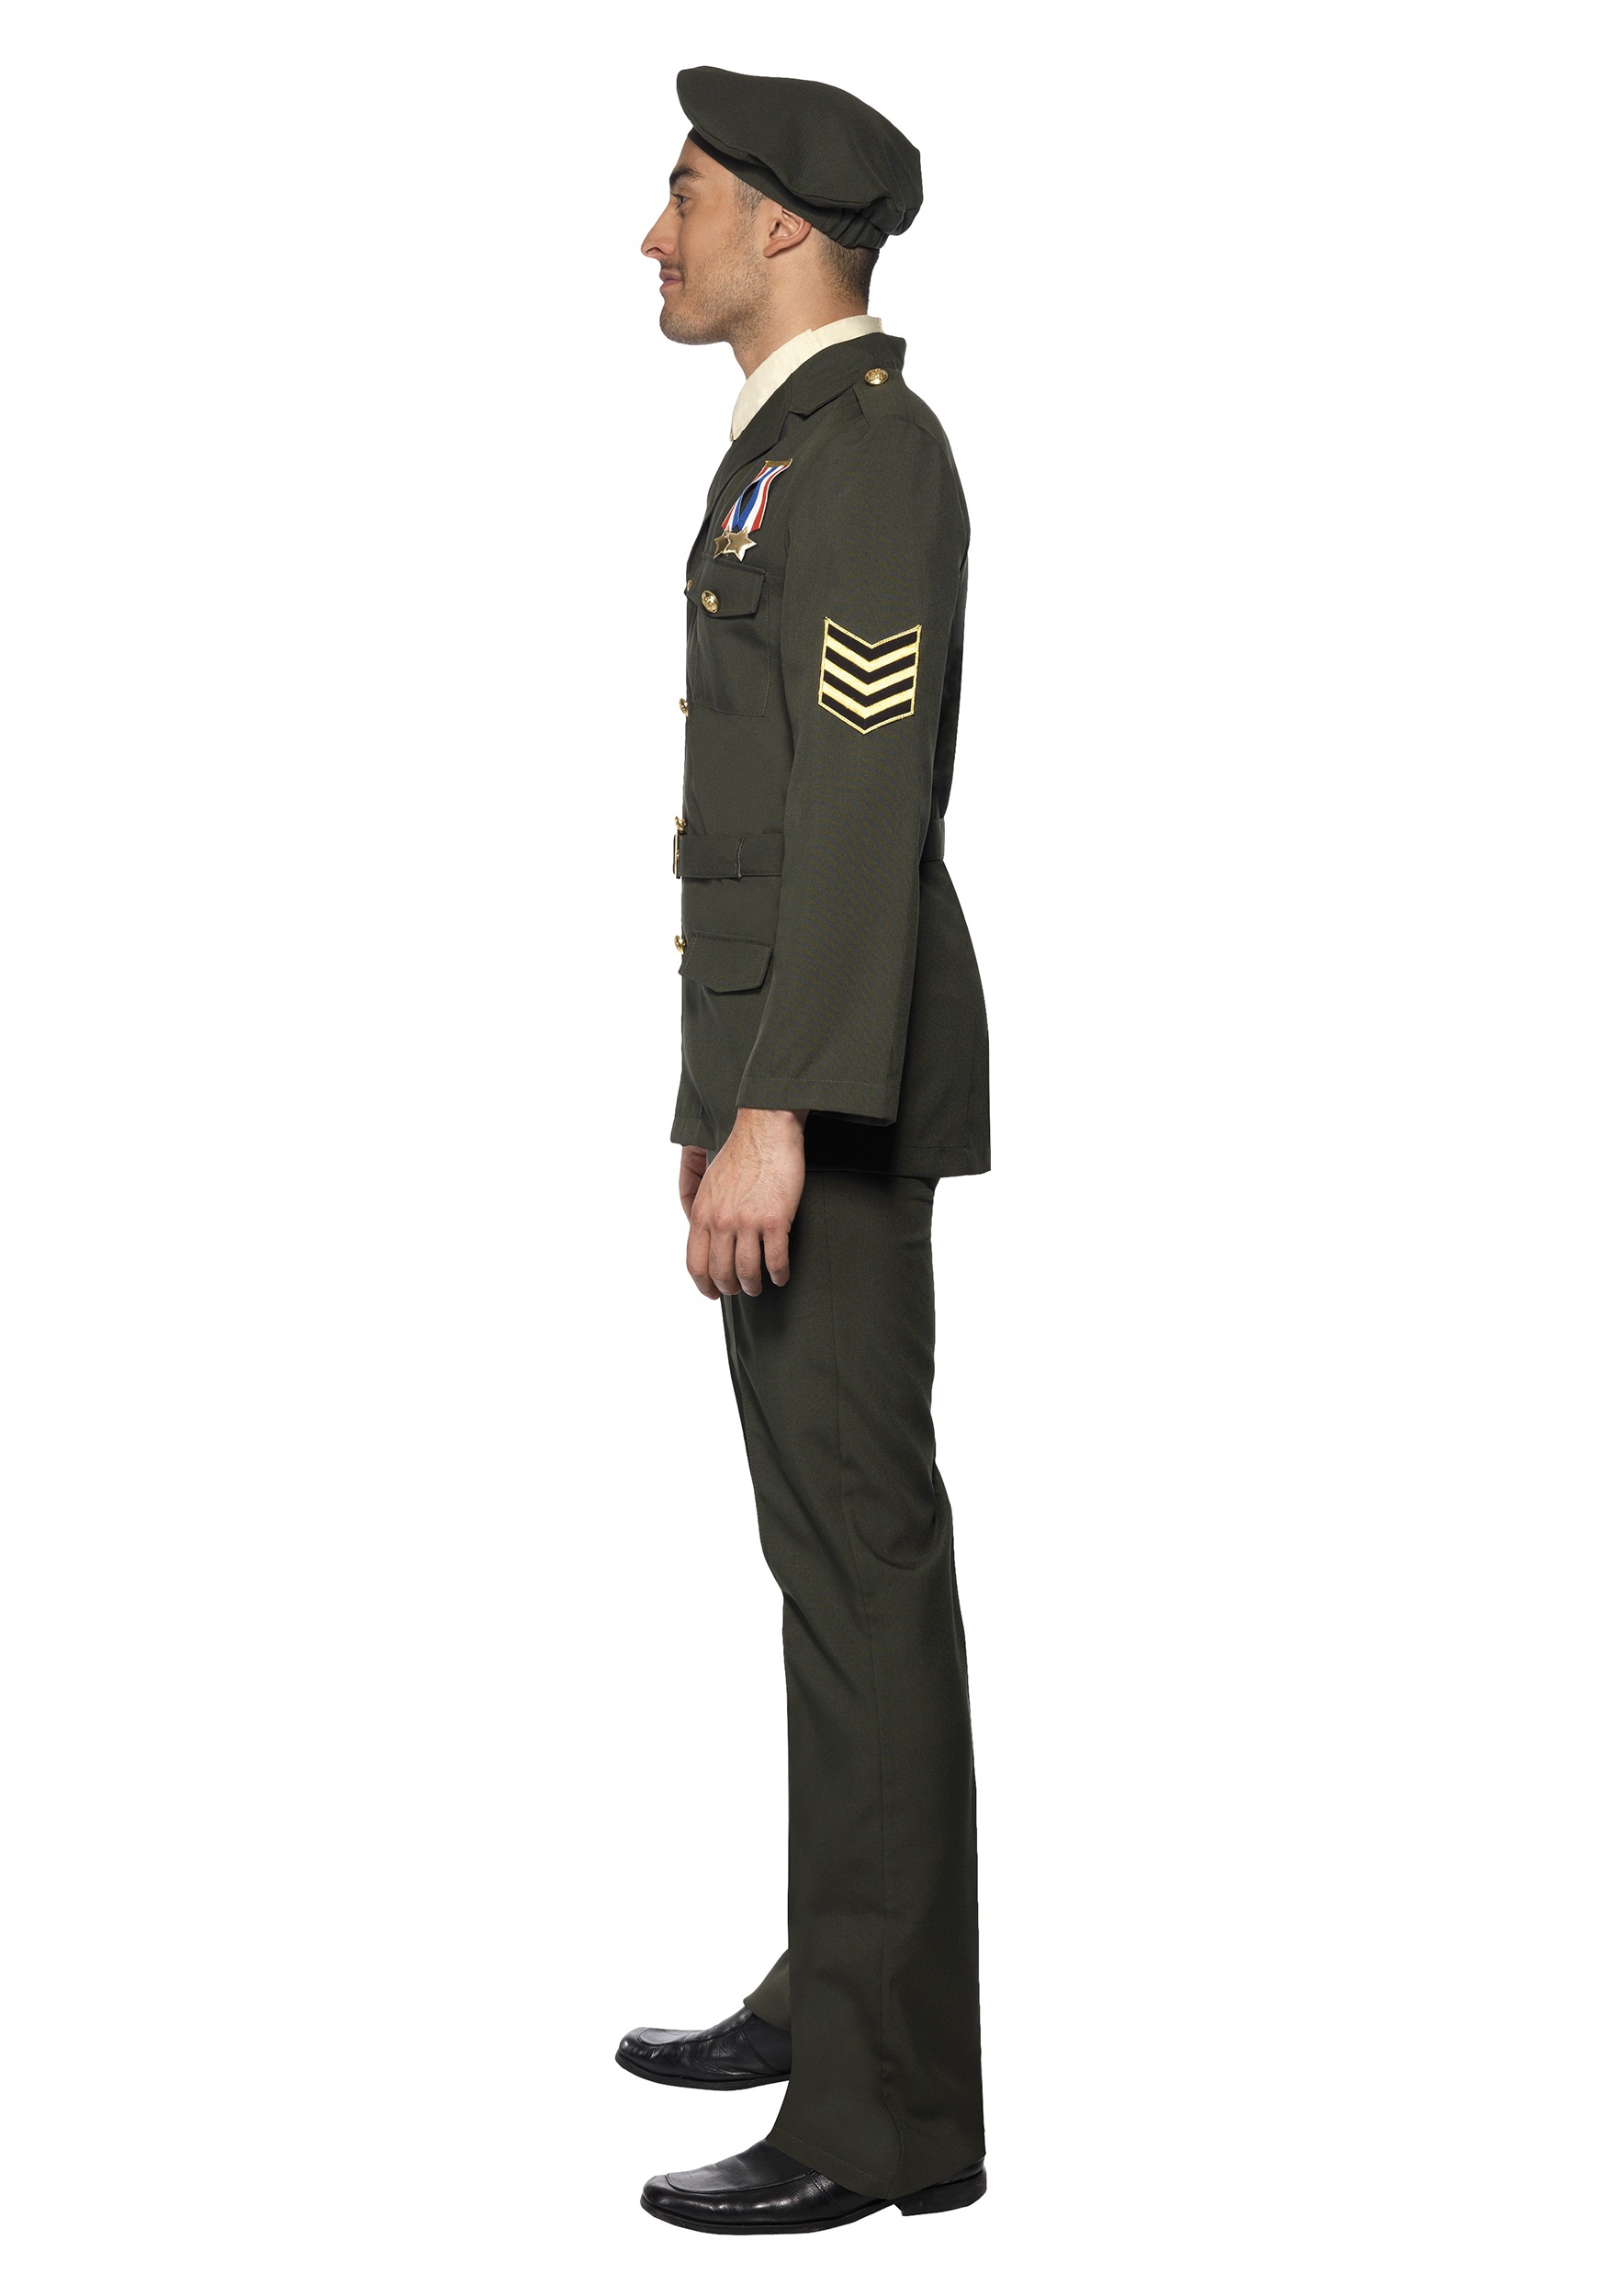 Mens Wartime Officer Costume